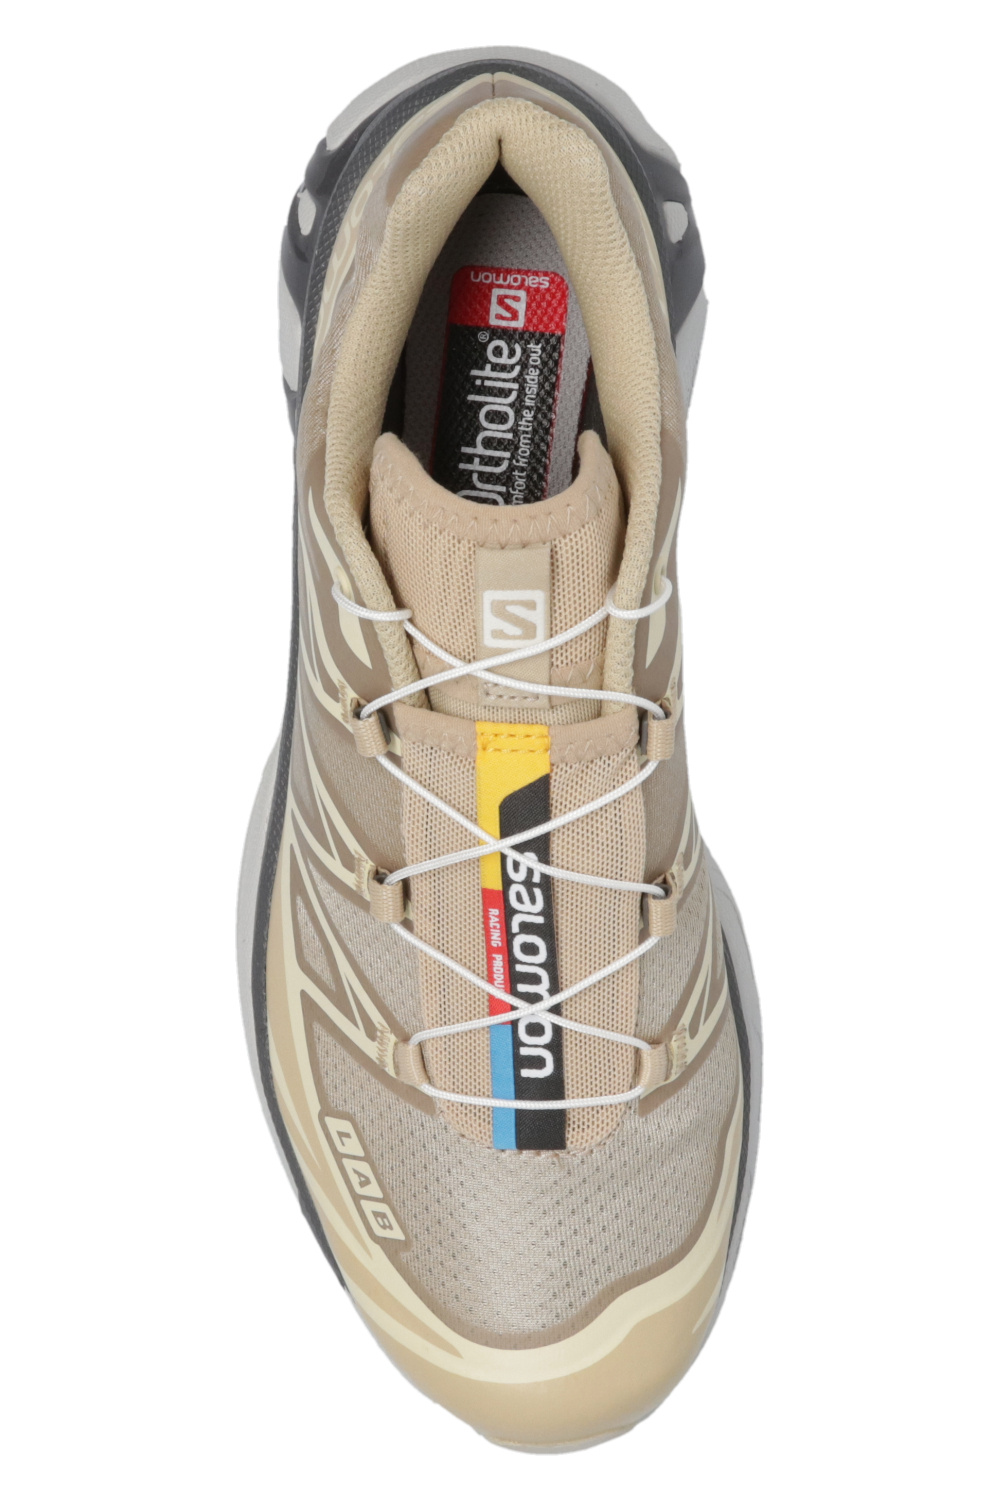 StclaircomoShops | Salomon Xa Pro Cswp shoes | Women's Shoes - Salomon 'XT - 6 Clear'